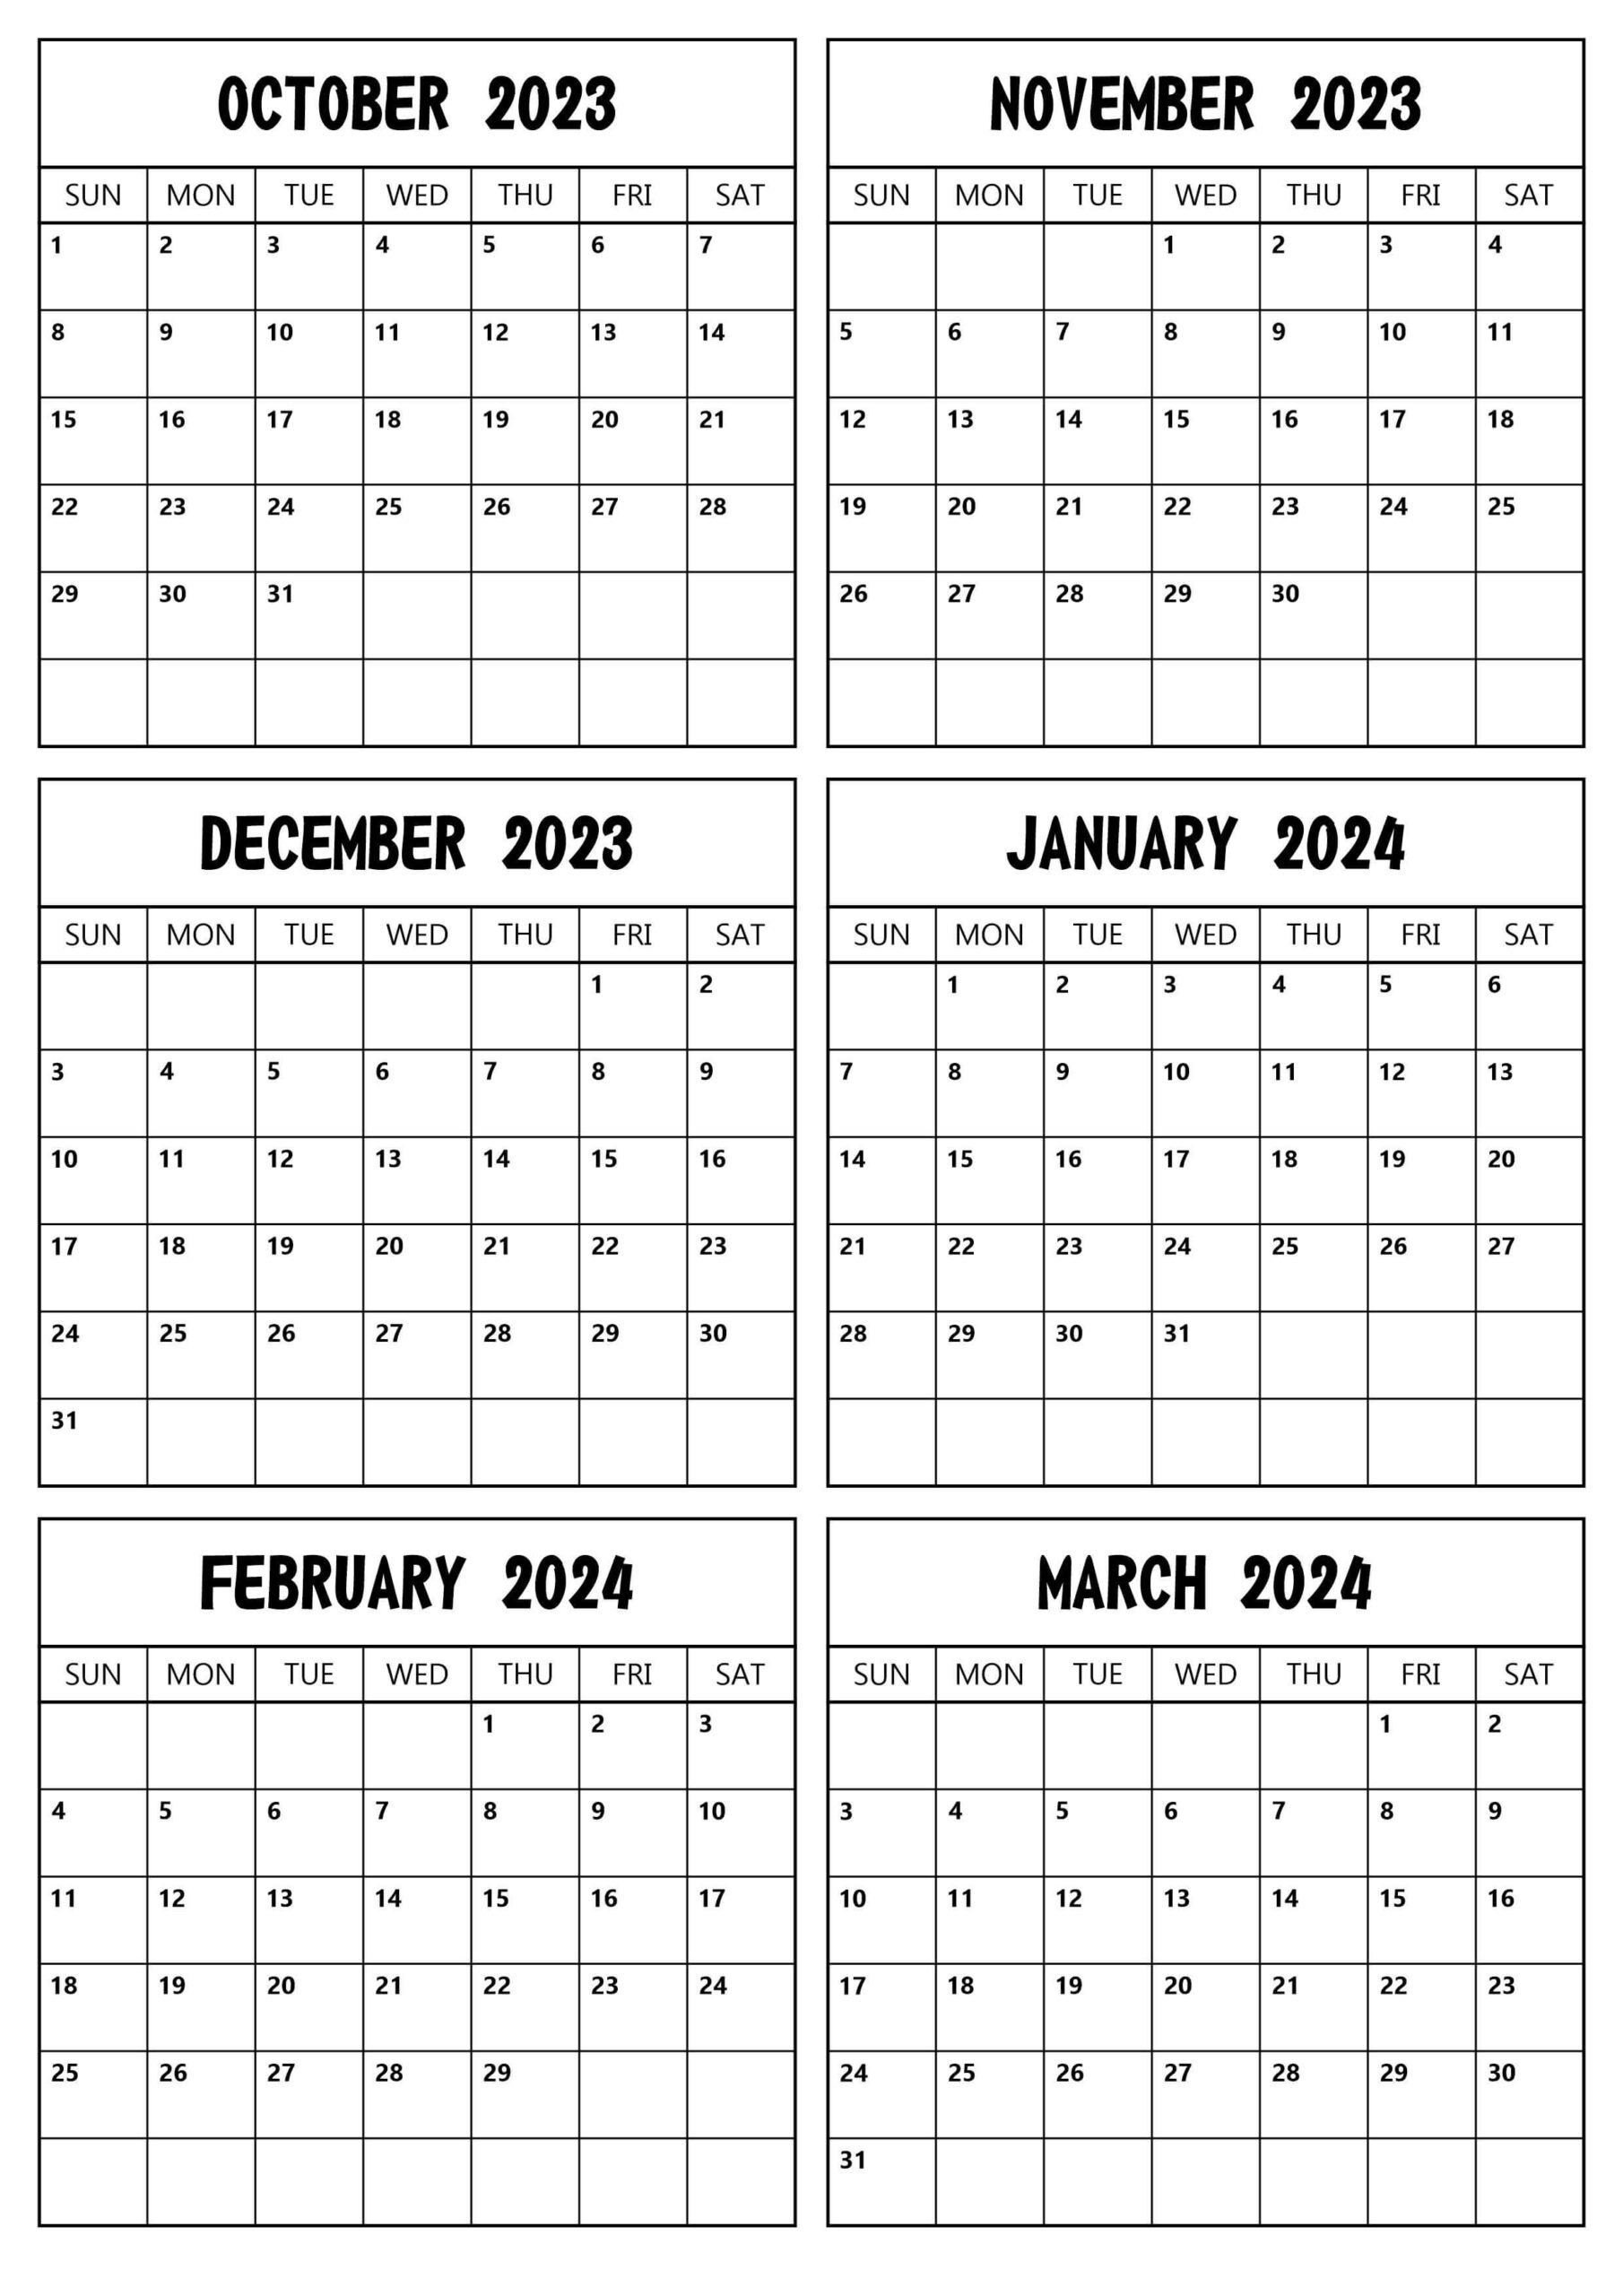 2023 October to 2024 March Calendar